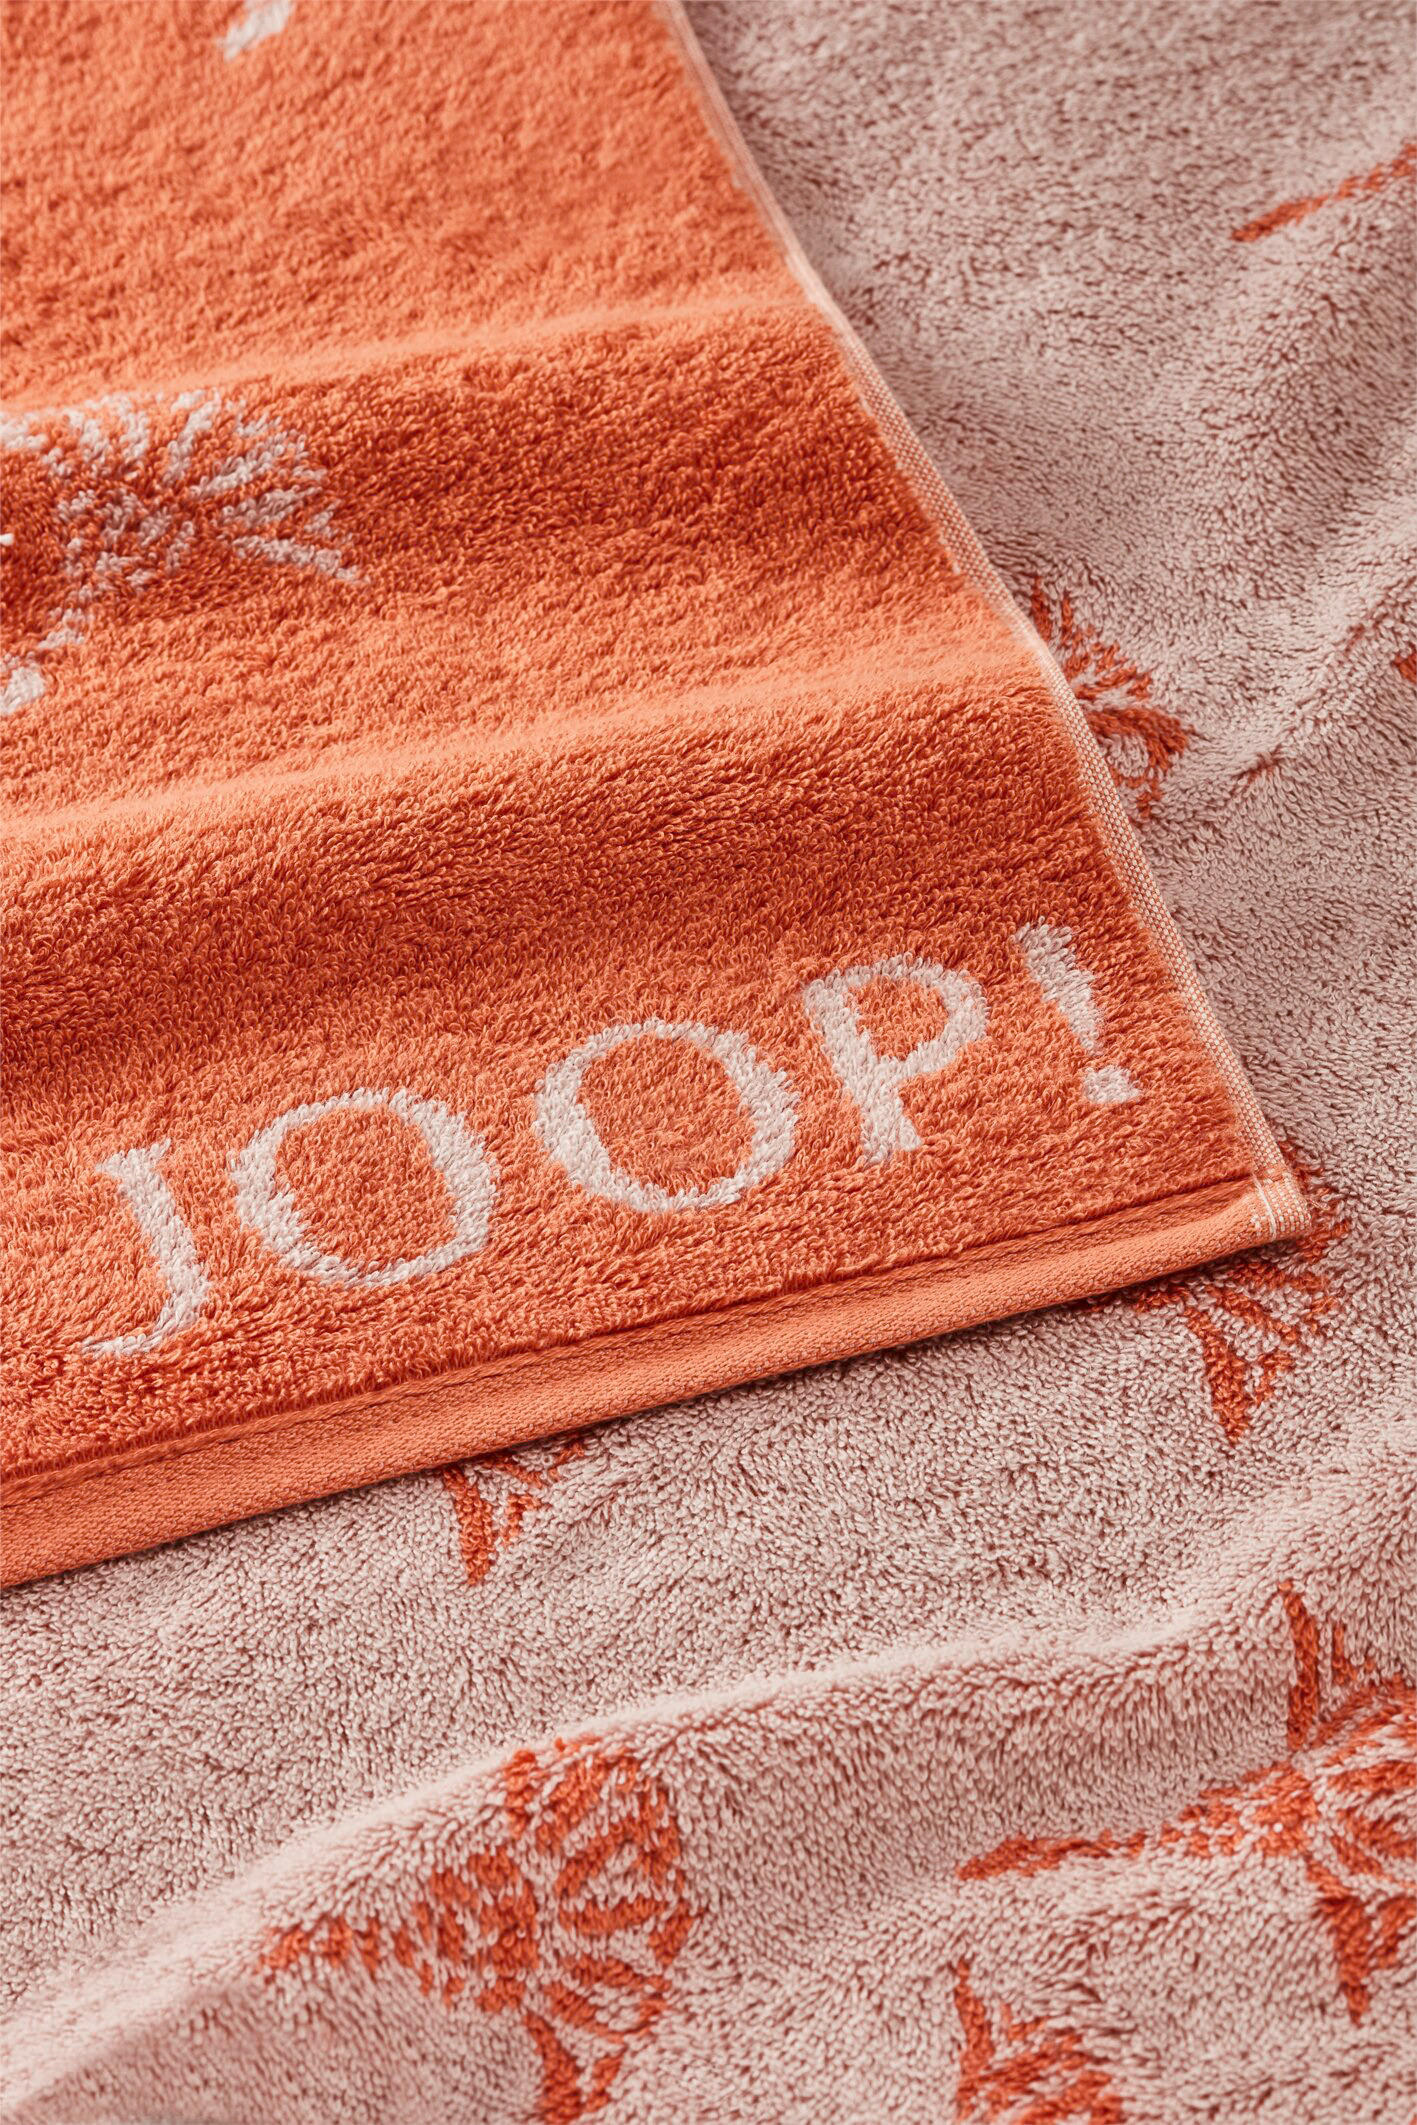 GÄSTETUCH Move  - Orange, Basics, Textil (30/50cm) - Joop!